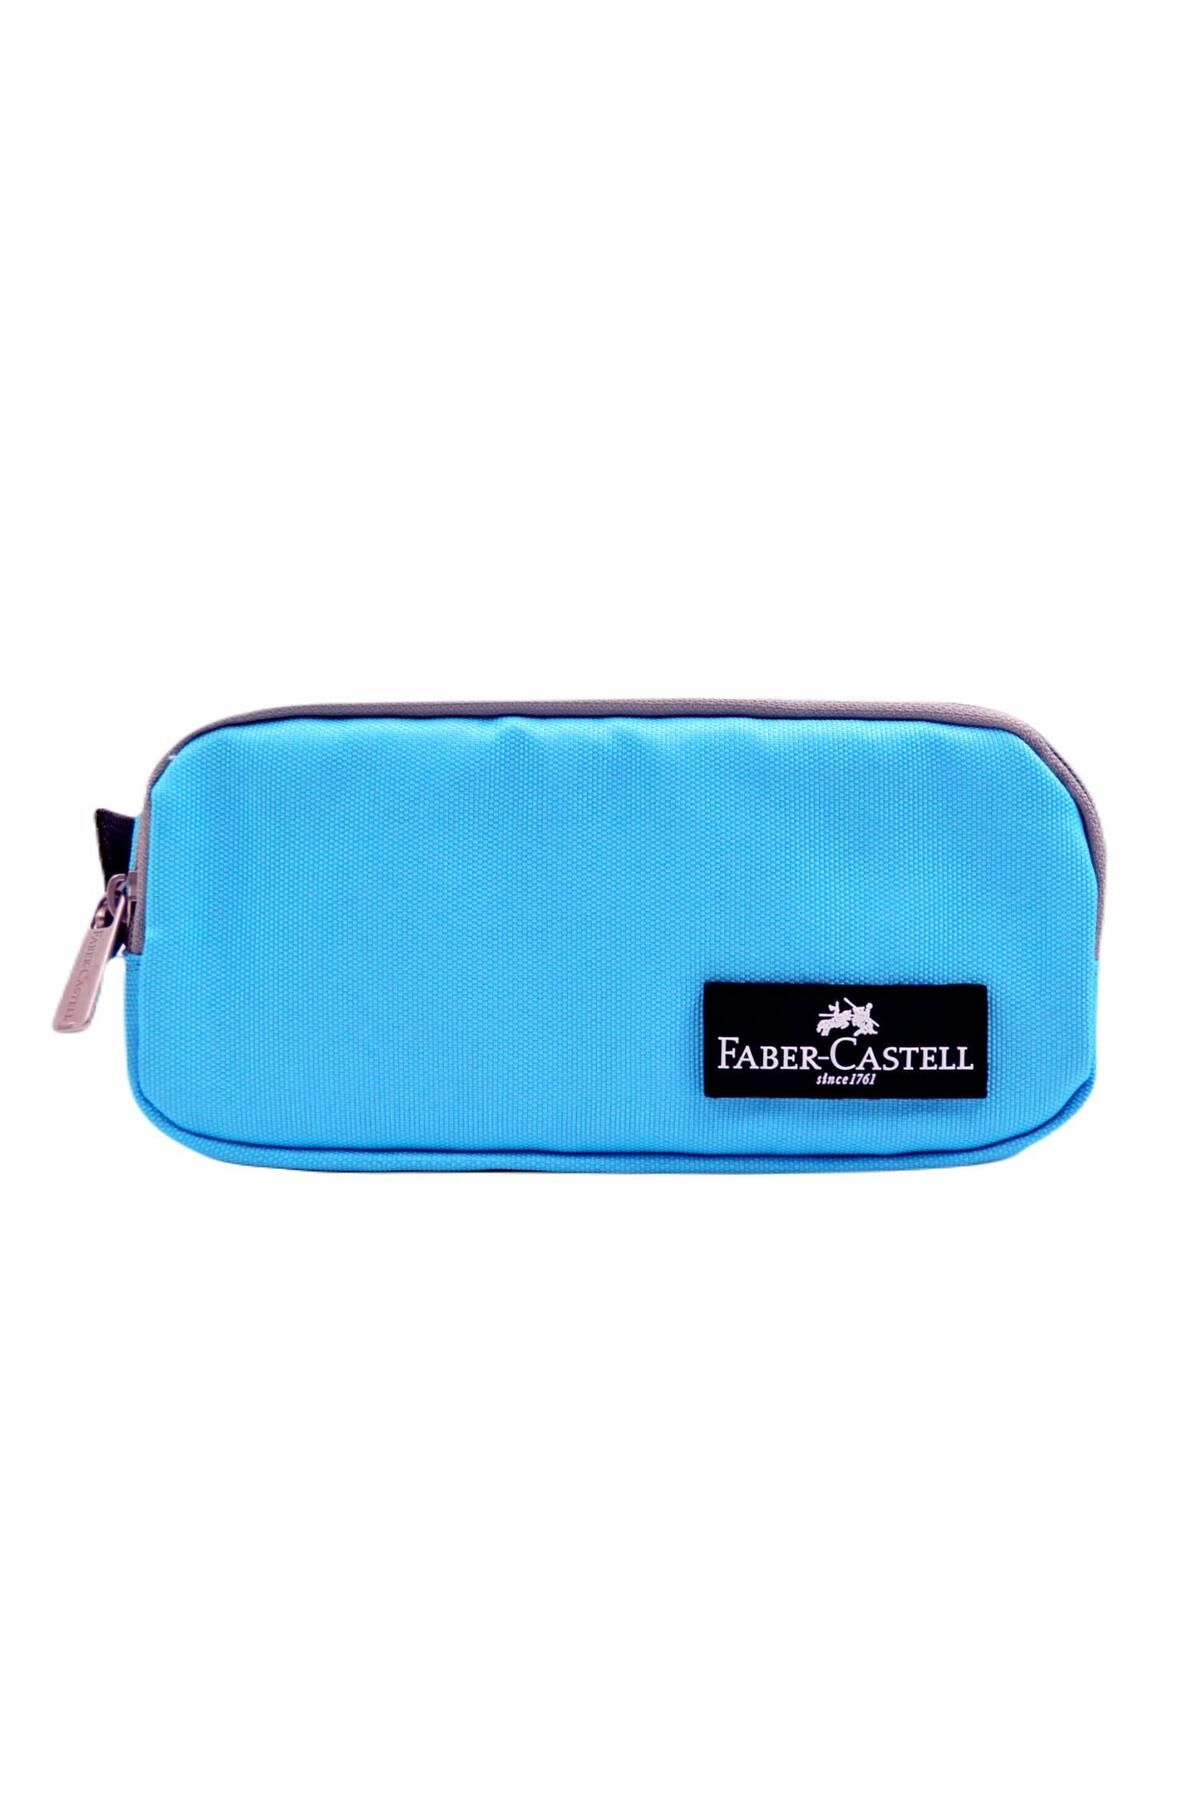 Faber Castell Compact Pencil Case – Talent BookStore 达人书局